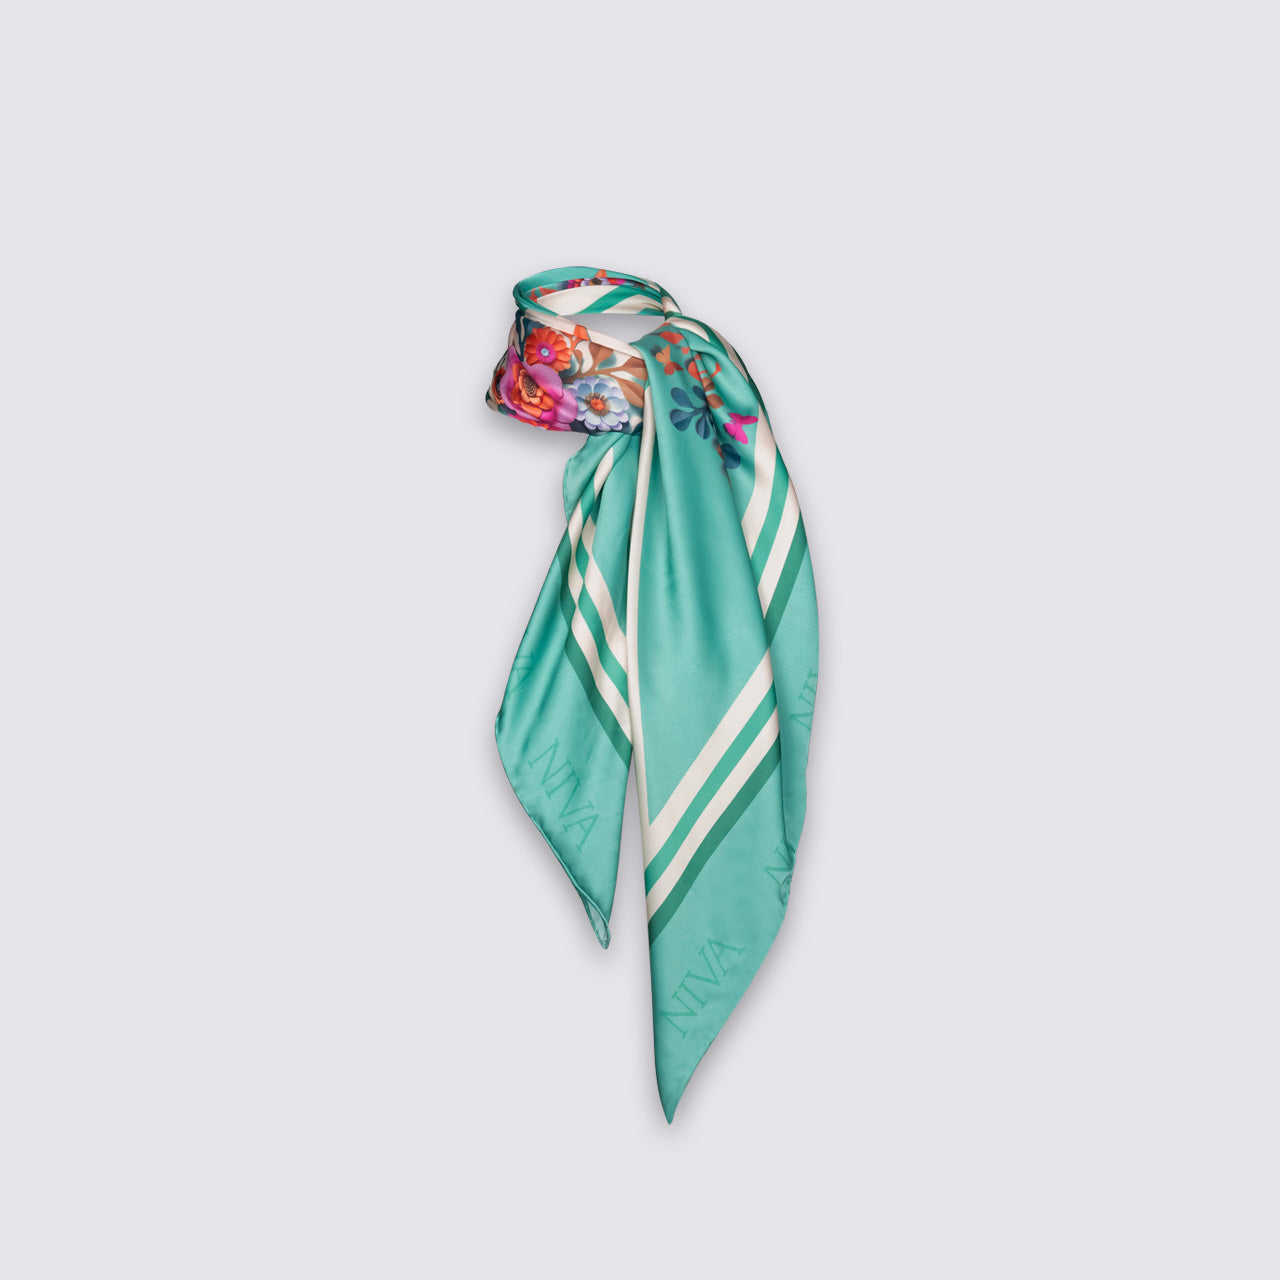 _Gift_Venice floral 3D print silk scarf